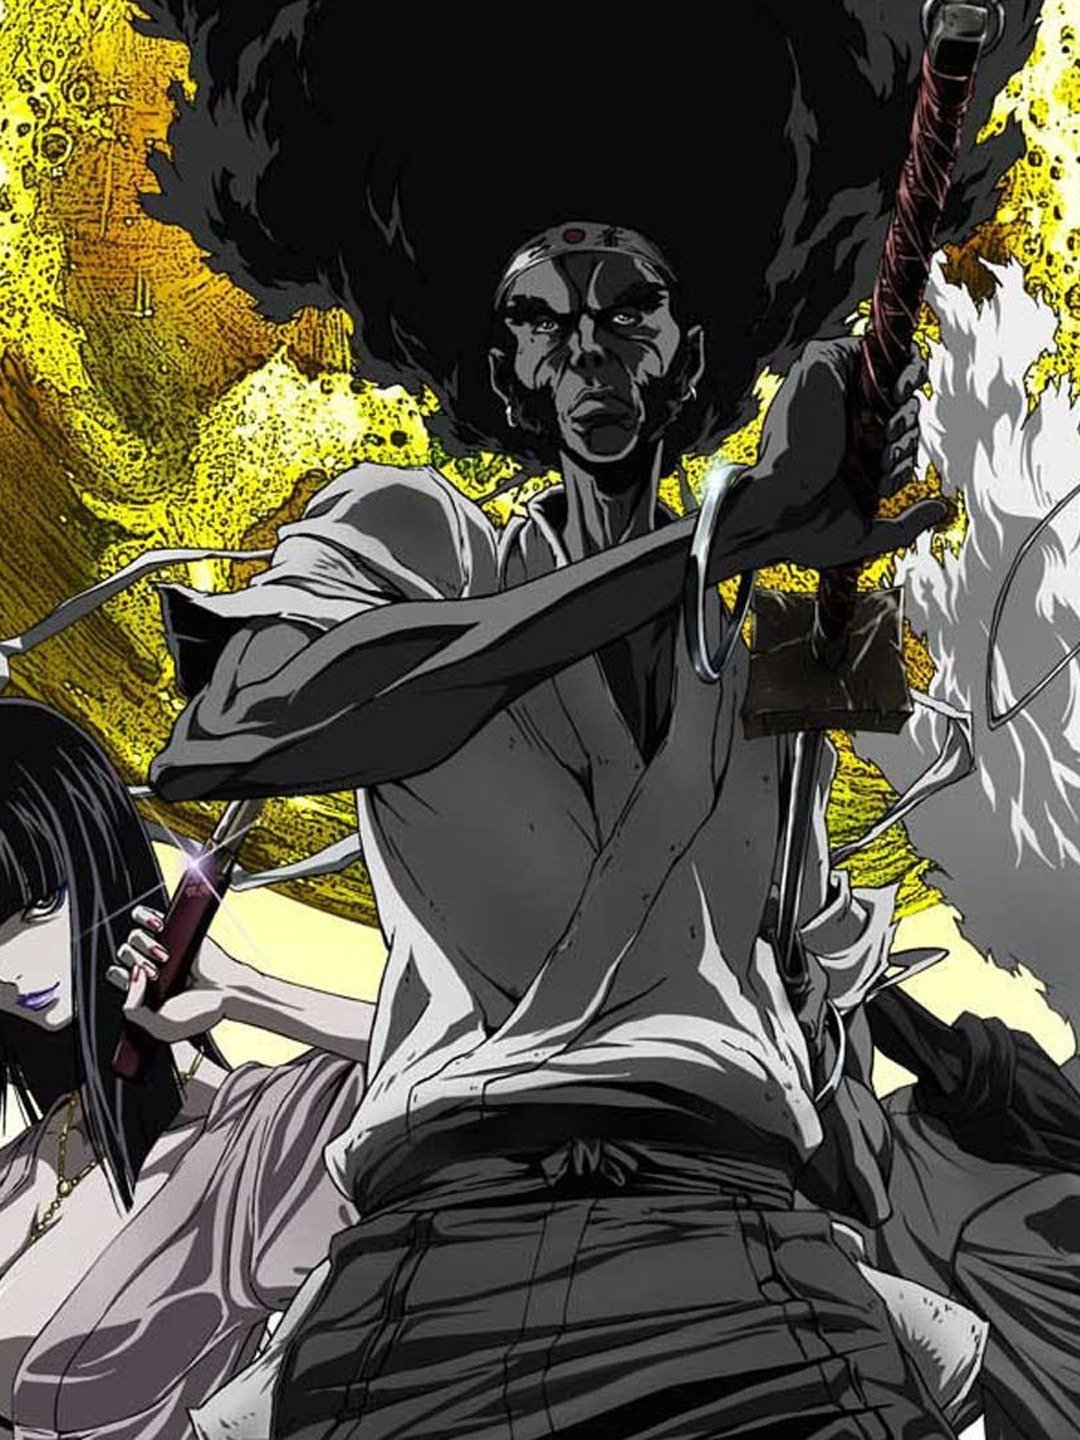 Netflix reveals African samurai anime Yasuke images, release date - Polygon